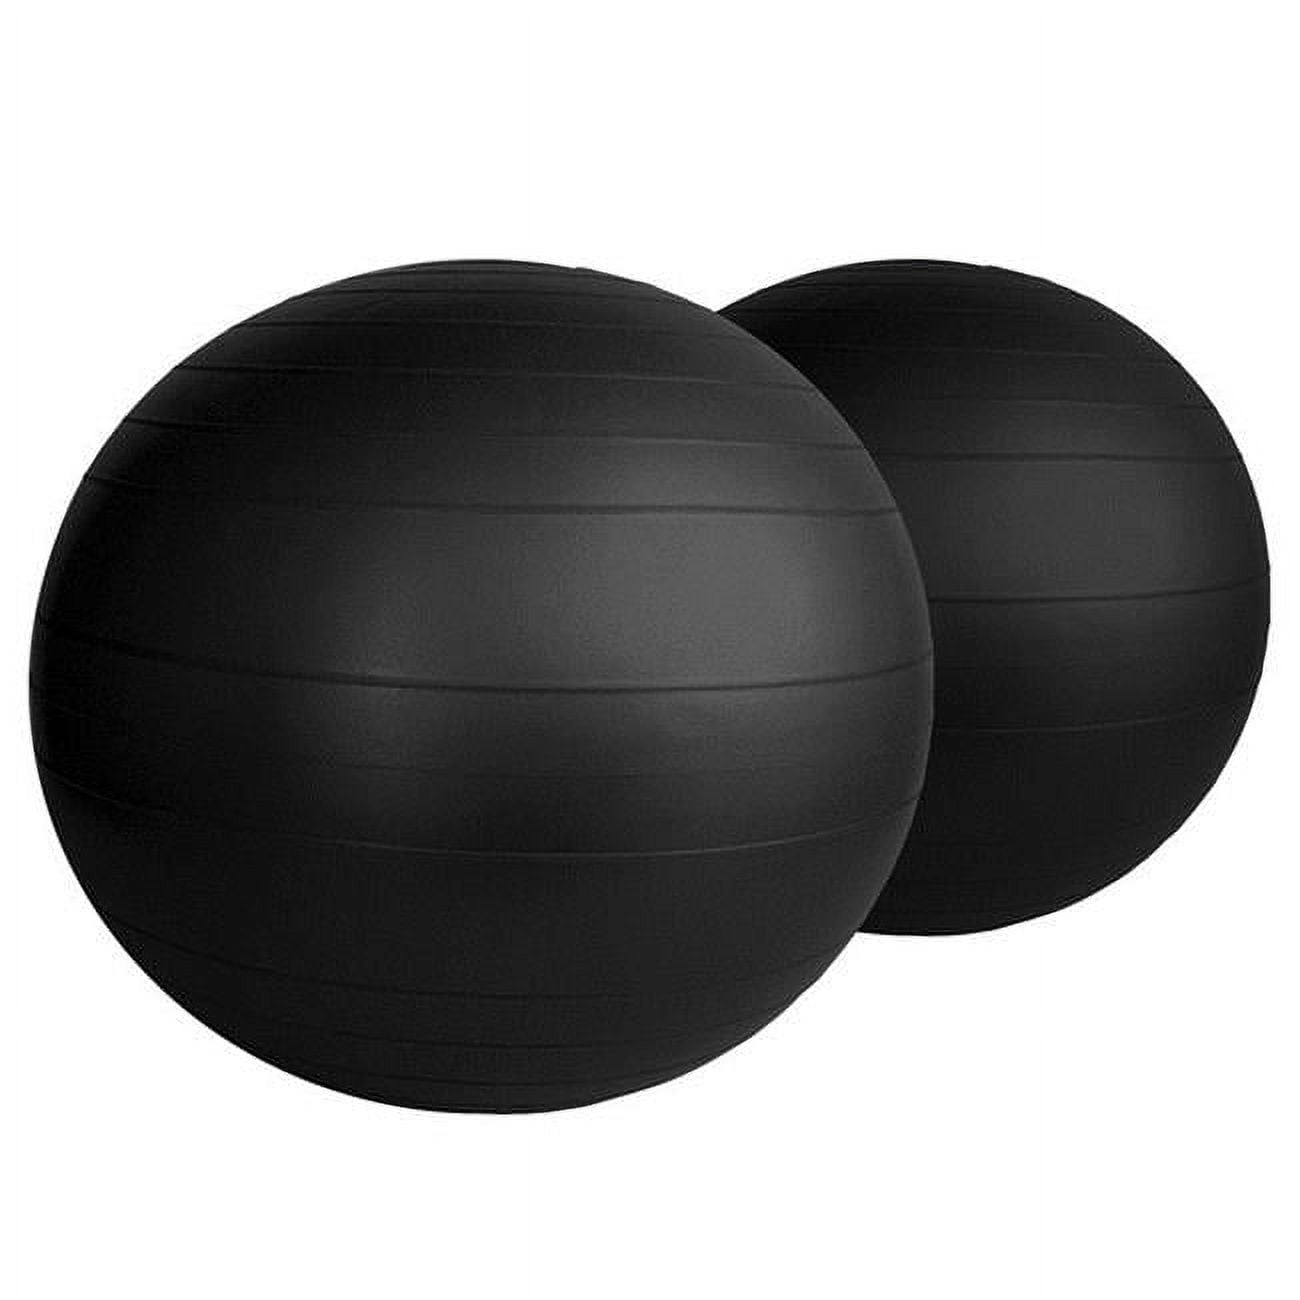 Picture of AeroMat 38106 75 cm Fitness Ball, Black